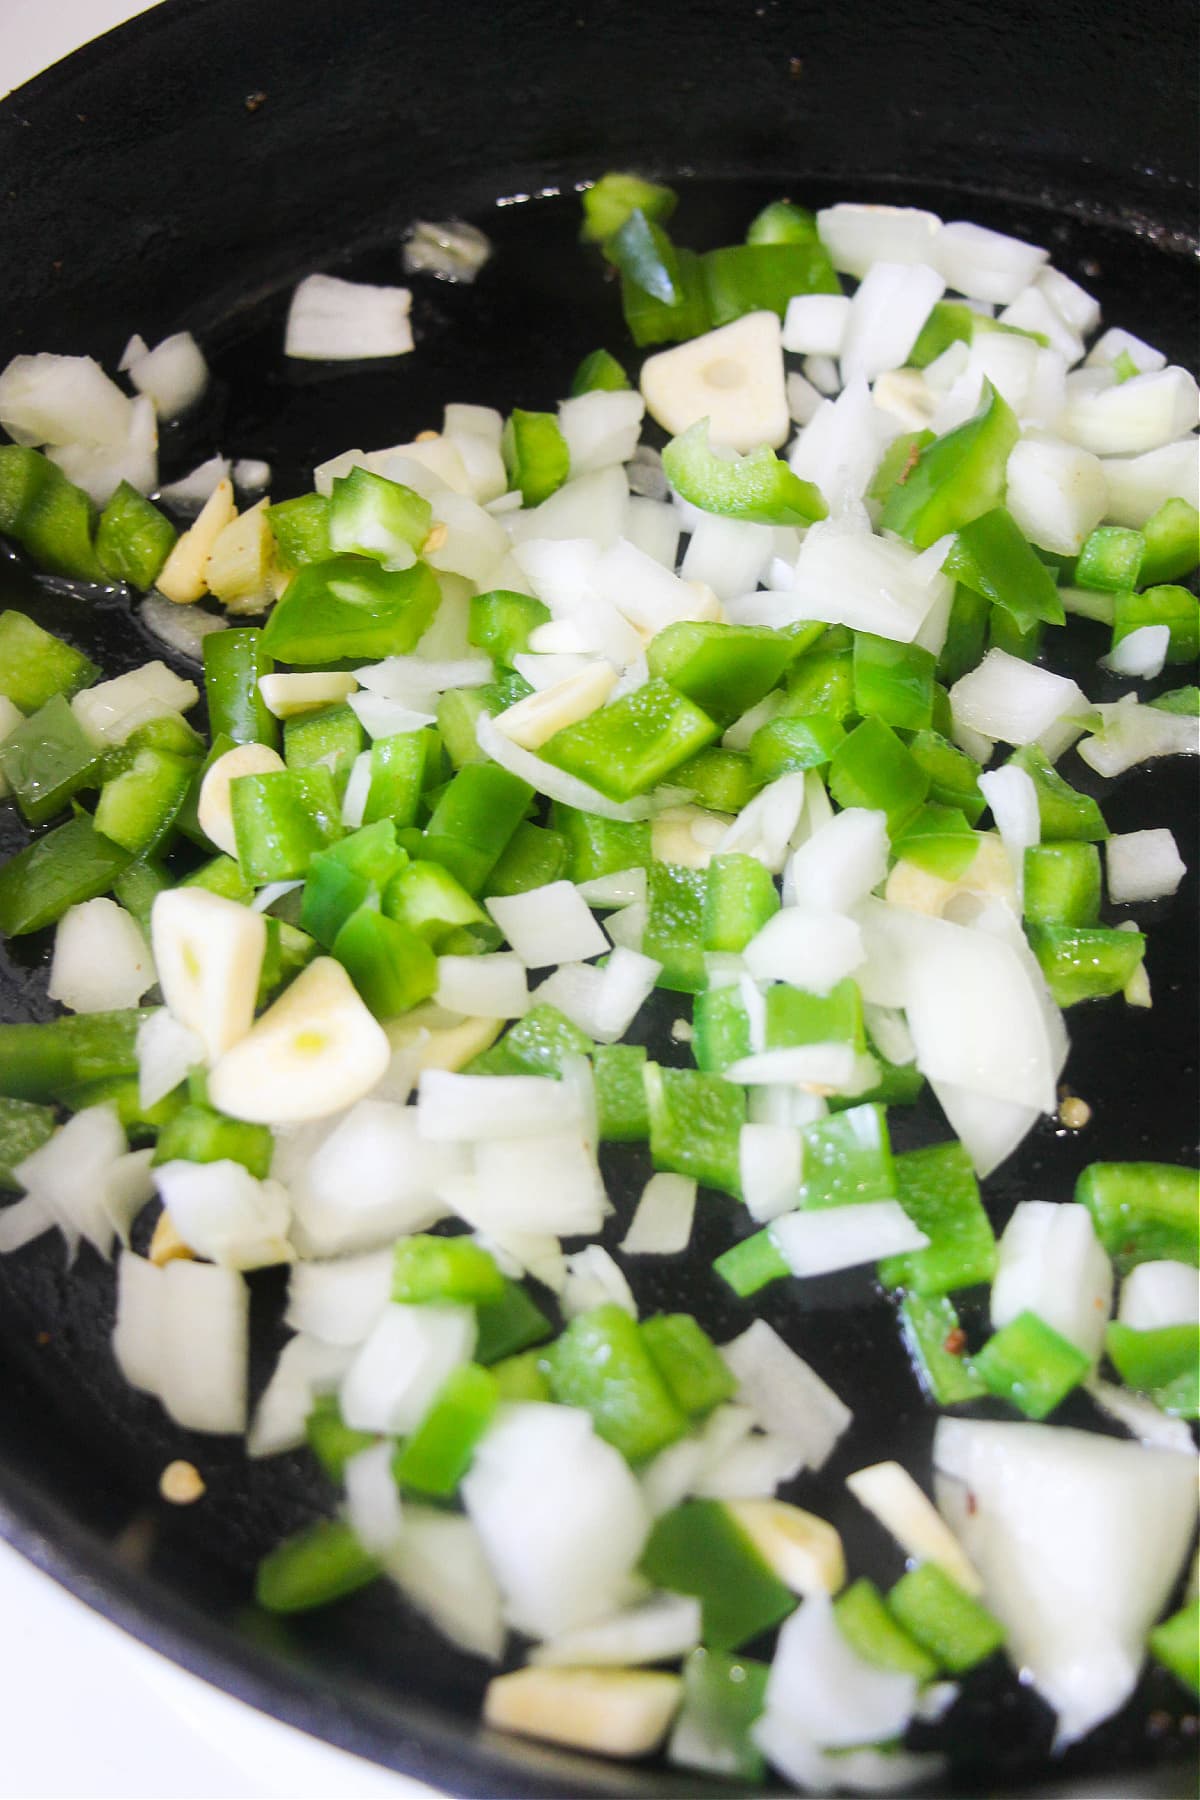 Chopped vegetables in skillet